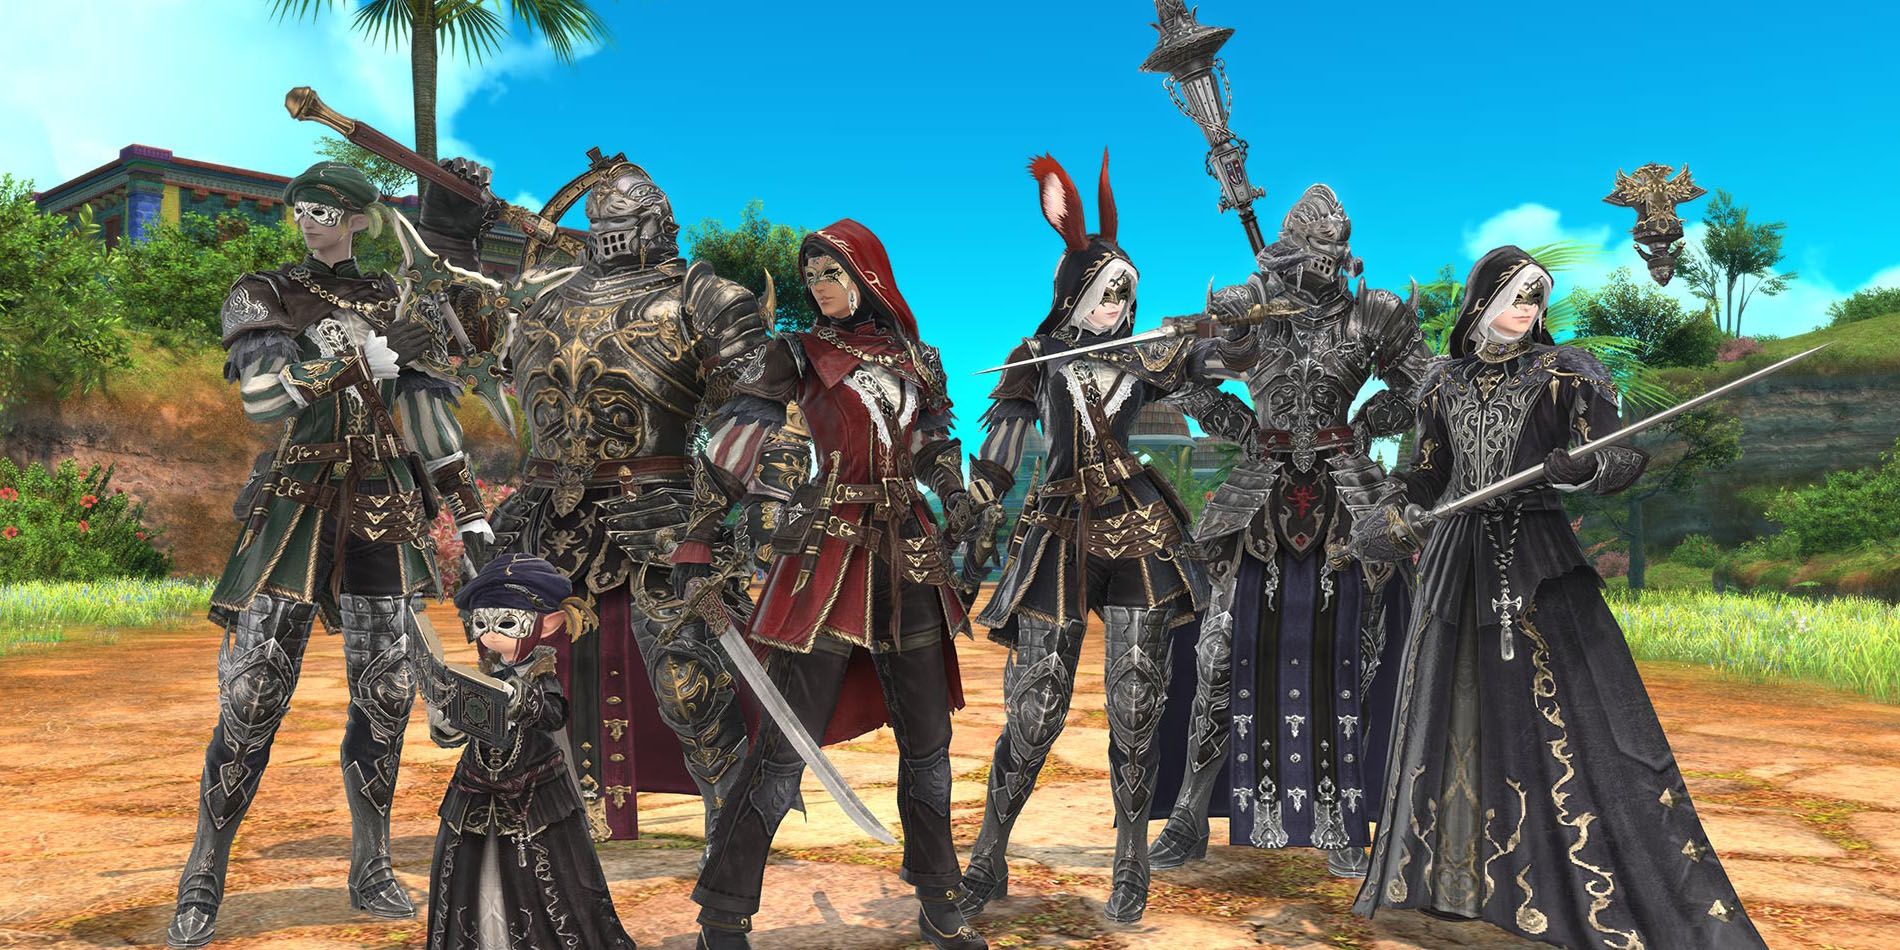 Rinascita Crafted Armor in Final Fantasy 14